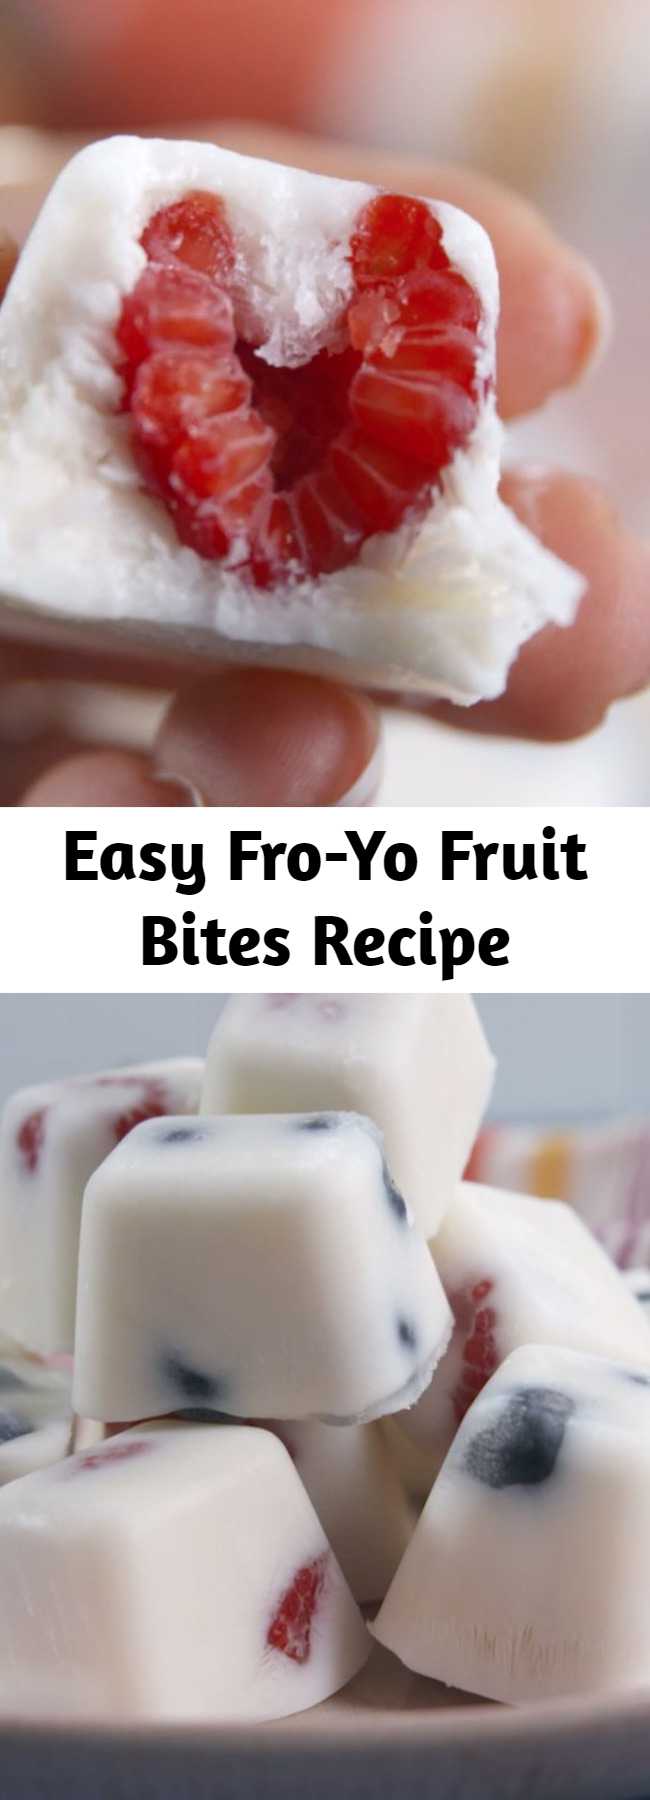 Easy Fro-Yo Fruit Bites Recipe - These fro-yo fruit bites combine yogurt, fresh fruit, and honey to create the perfect frosty snack.